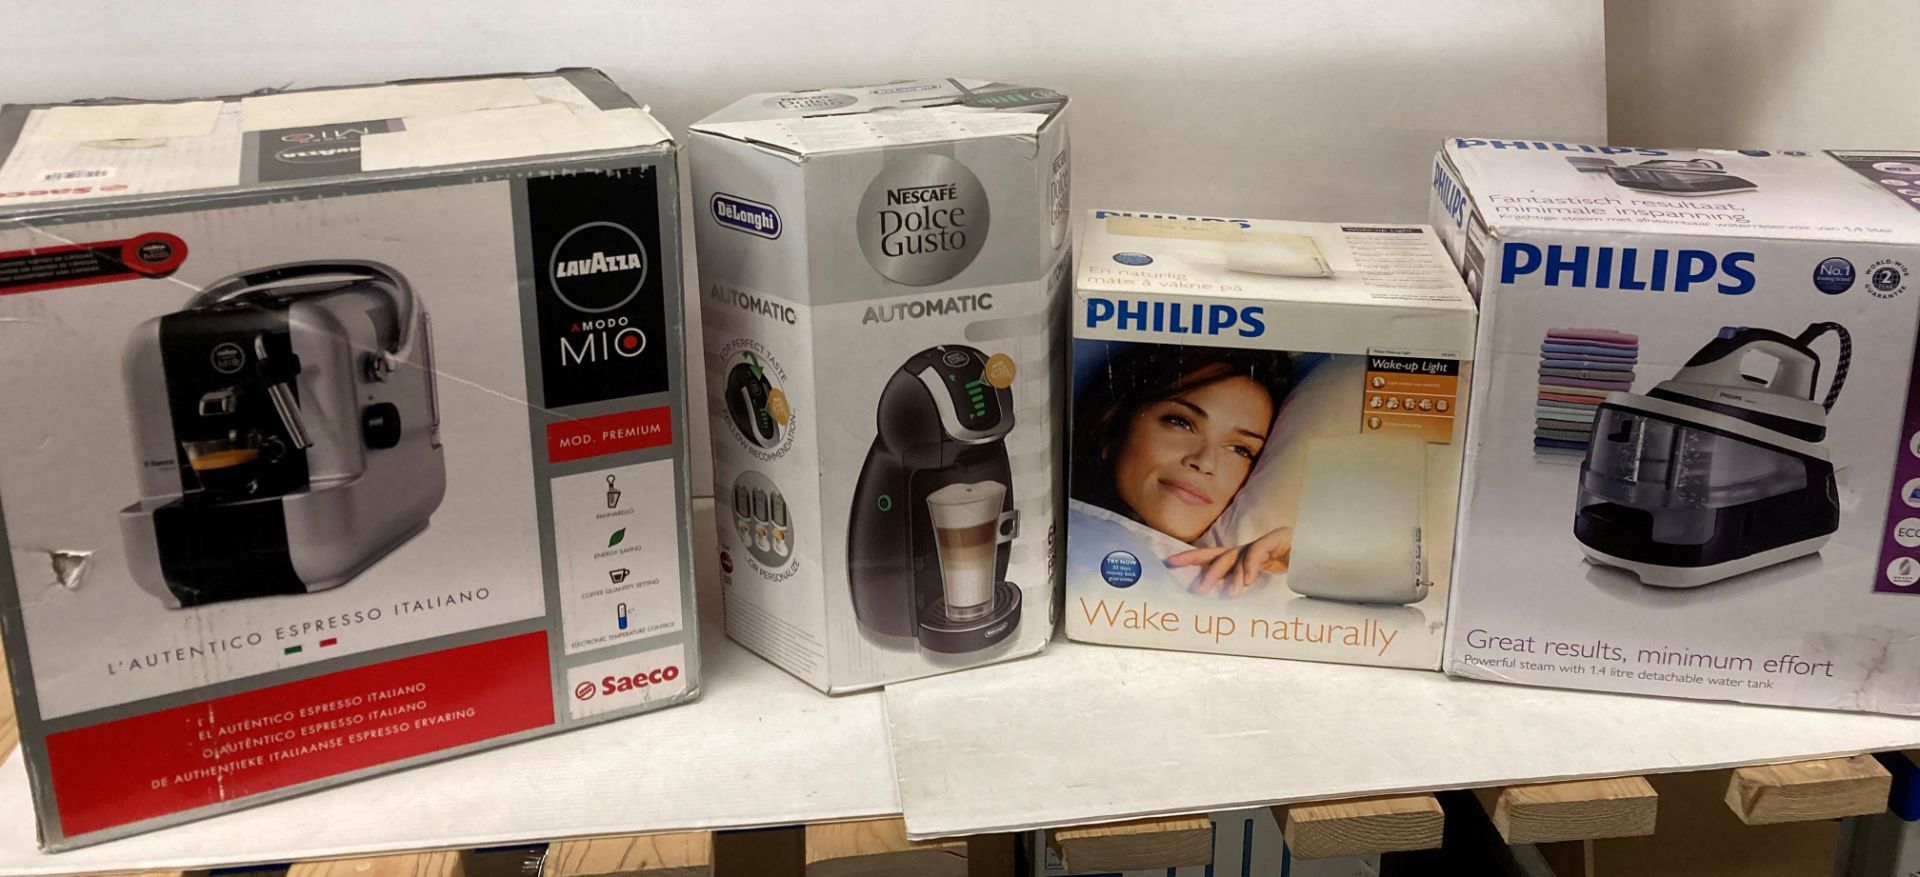 4 x items - Lavazza coffee machine, Philips steam iron with 1.